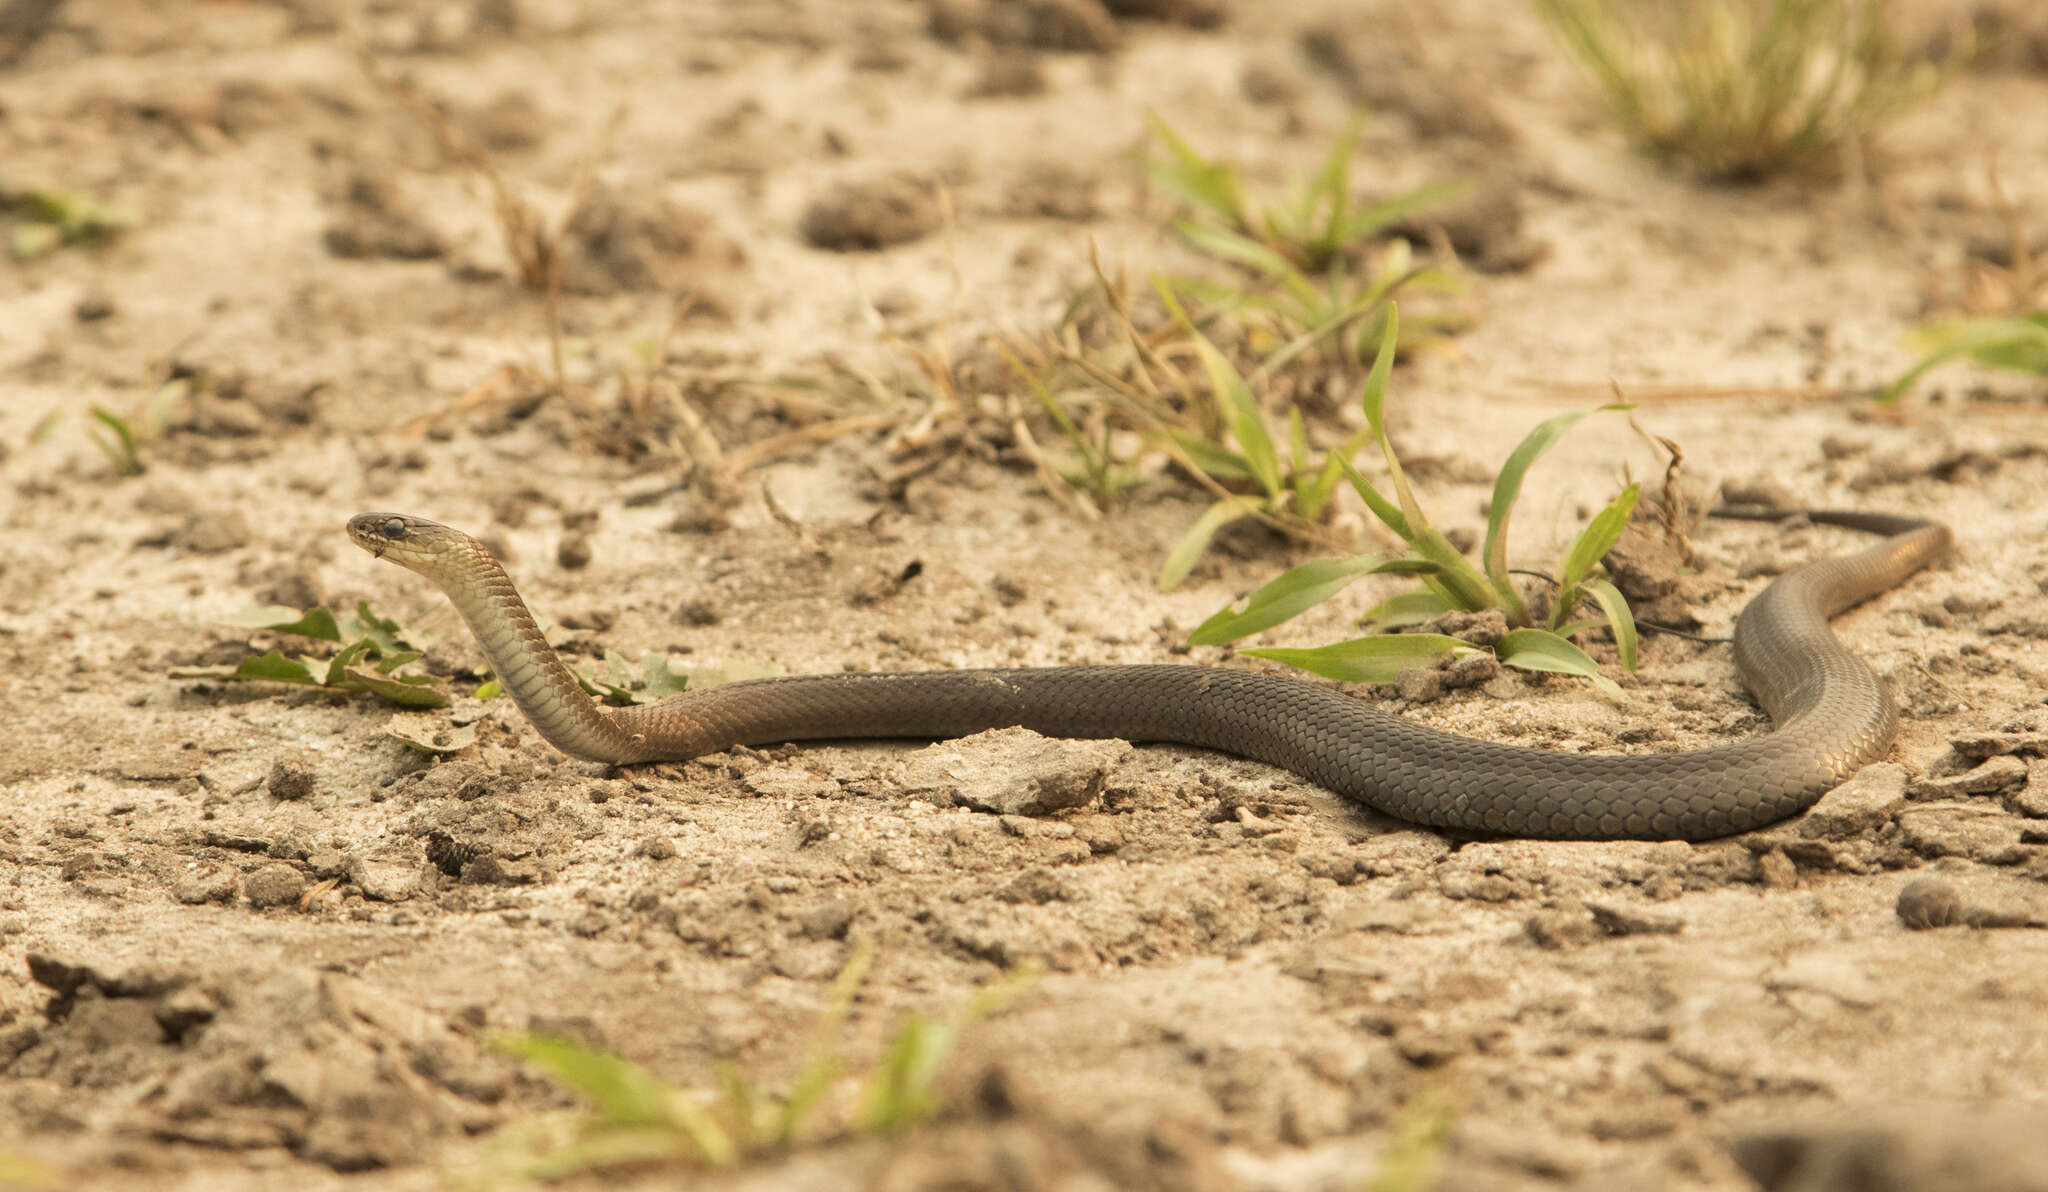 Image of Black-bellied Swamp Snake